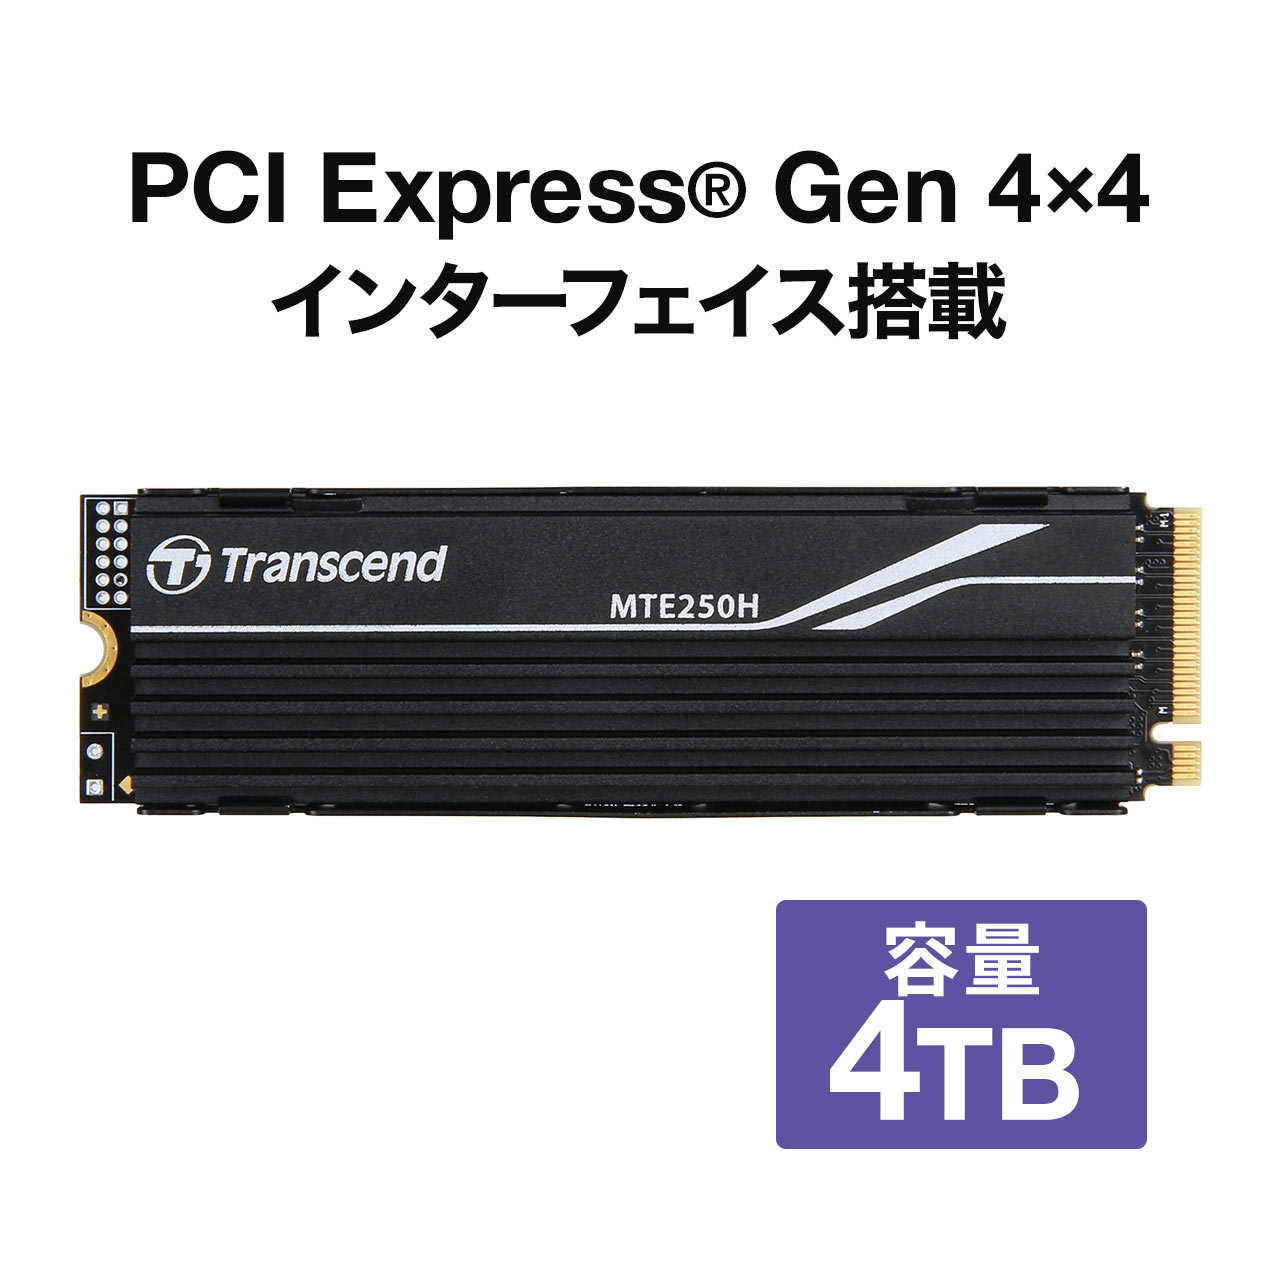 Transcend PCIe M.2 SSD 250H 4T